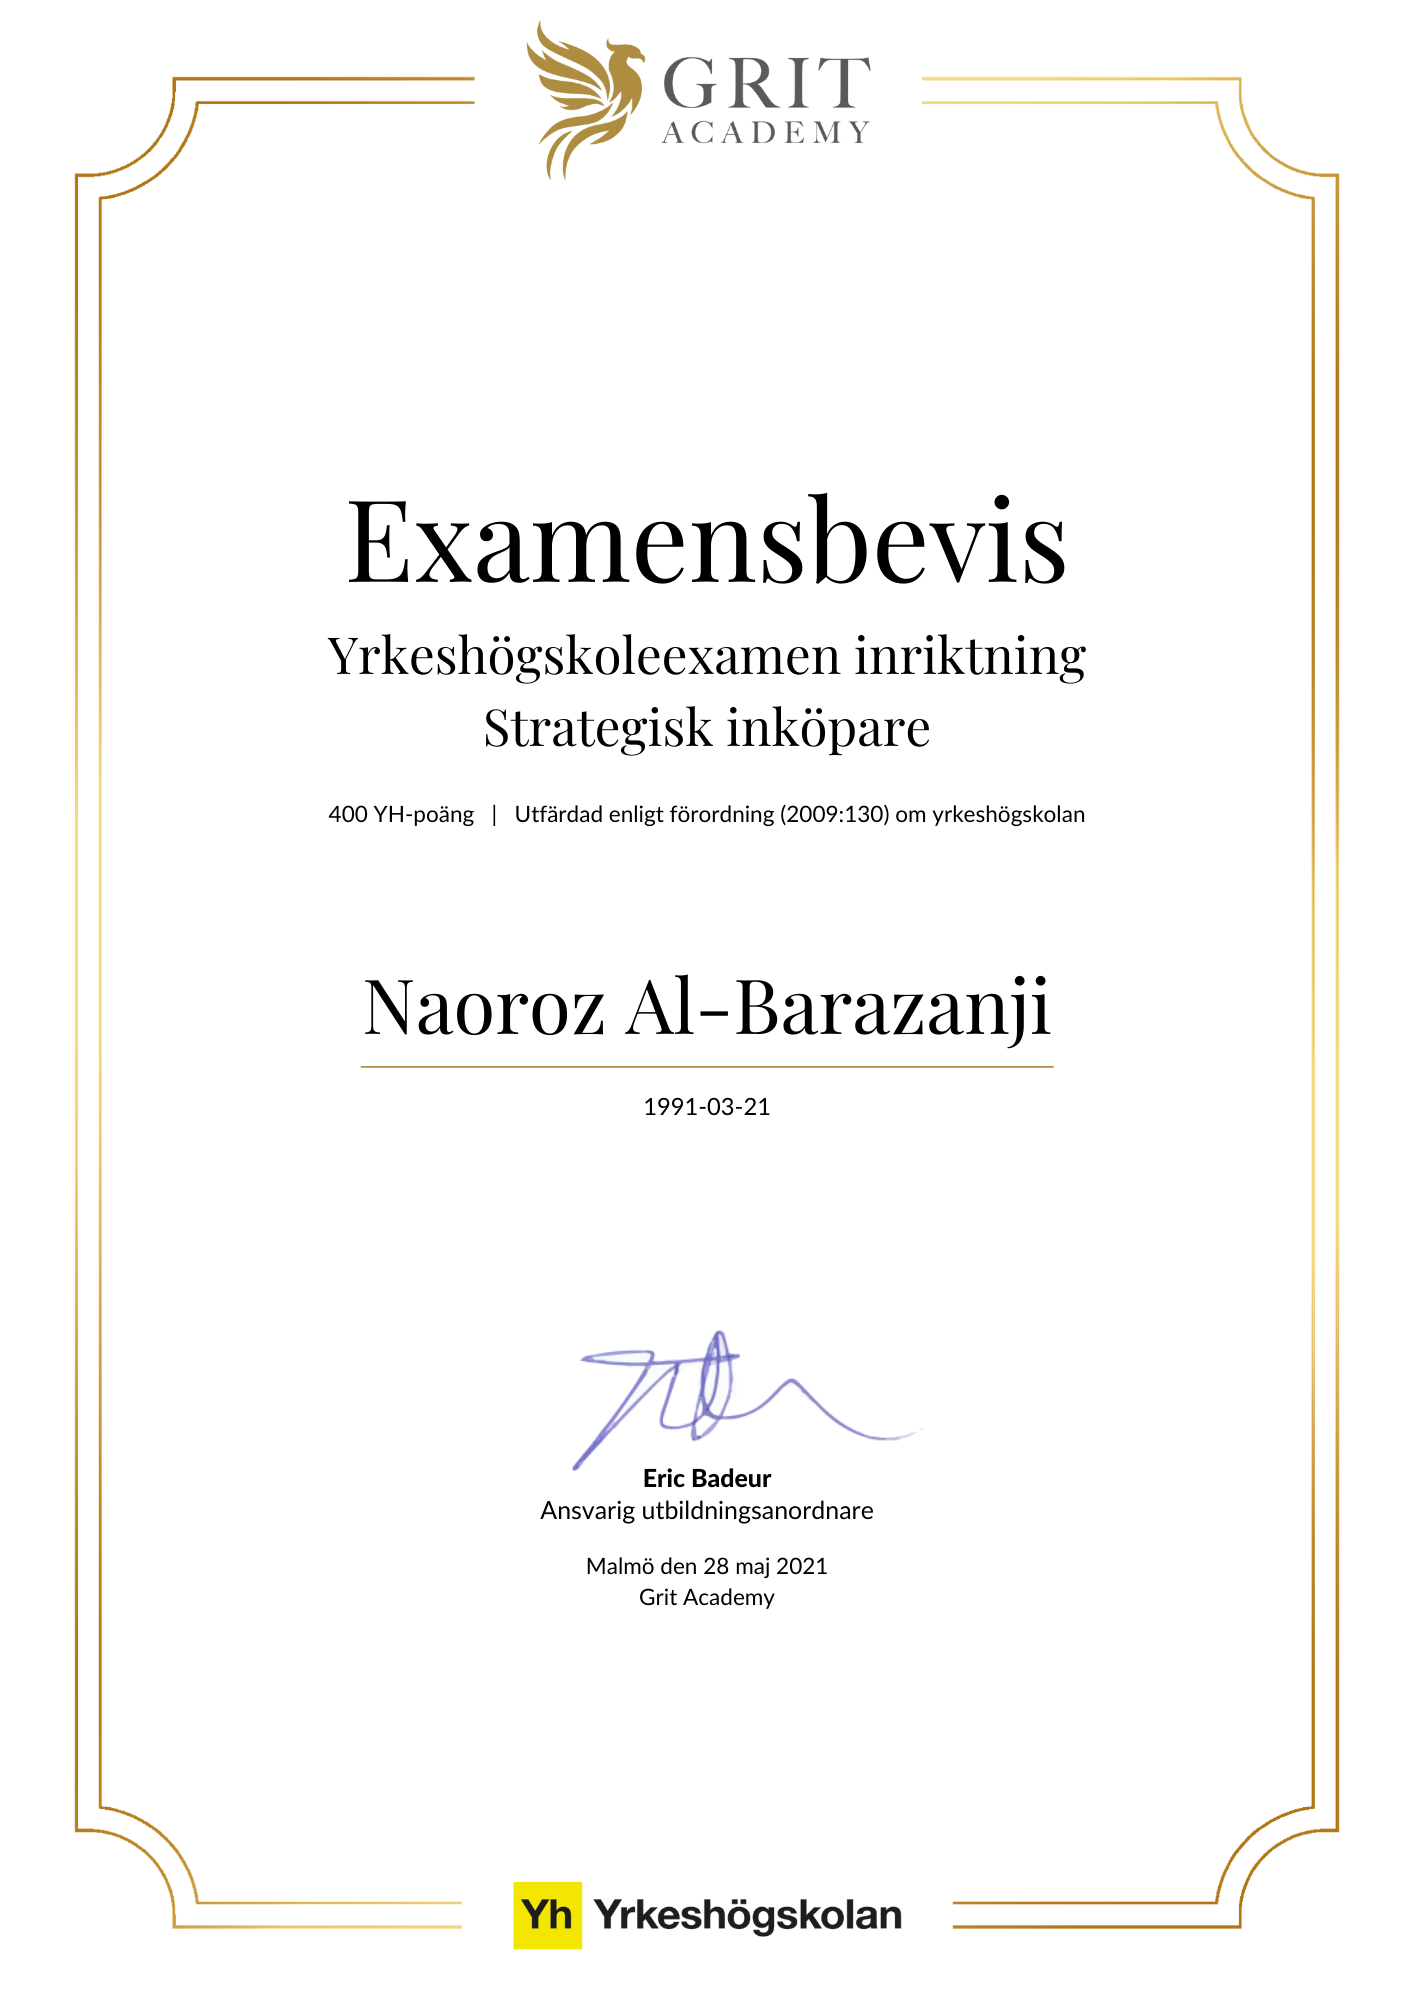 Examensbevis Naoroz Al-Barazanji - 1